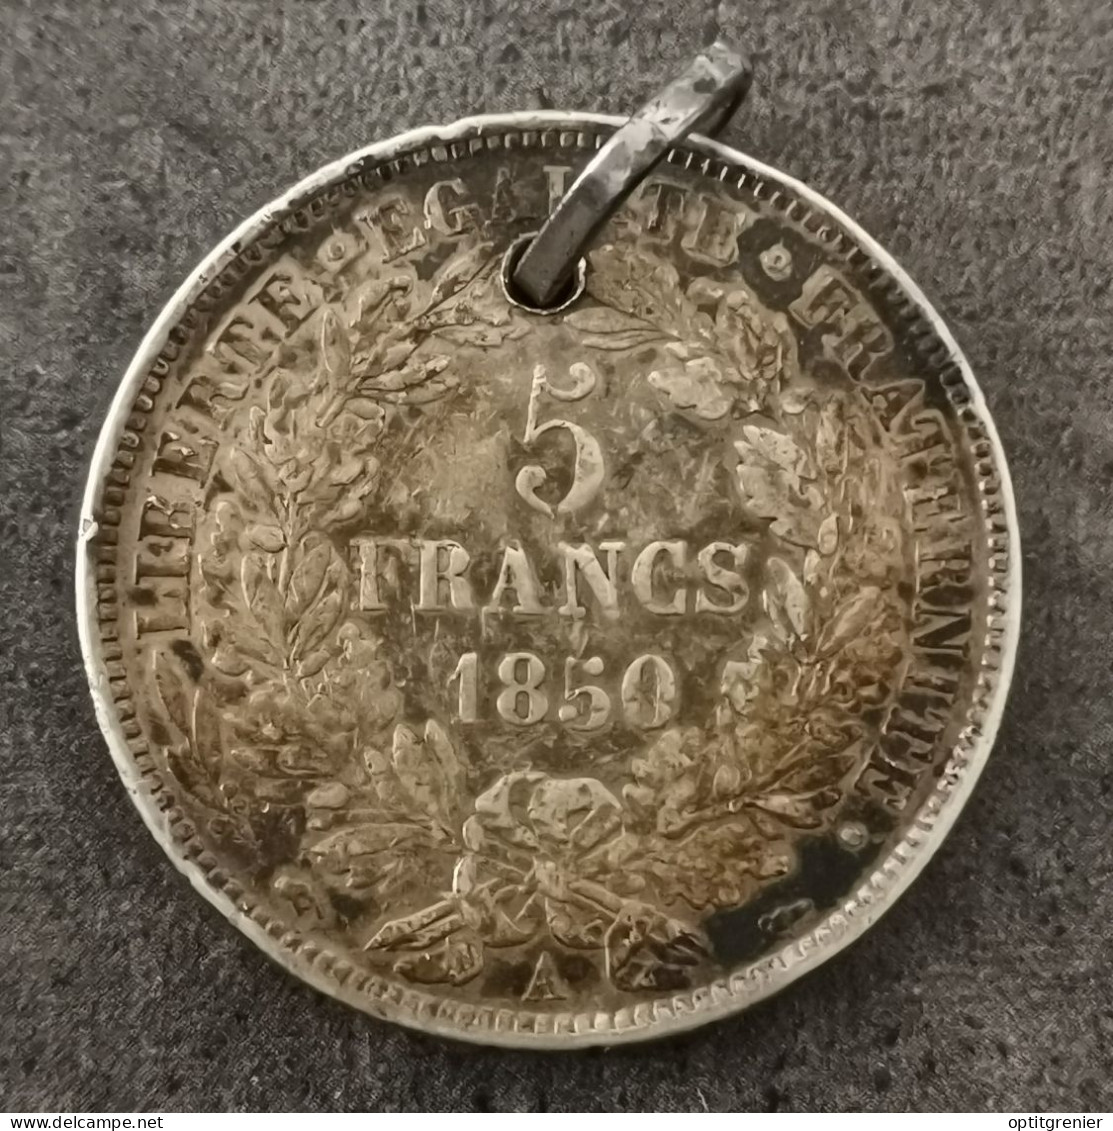 PENDENTIF 5 FRANCS CERES ARGENT 1850 A PARIS / II REPUBLIQUE / FRANCE / SILVER / PATINE - 5 Francs